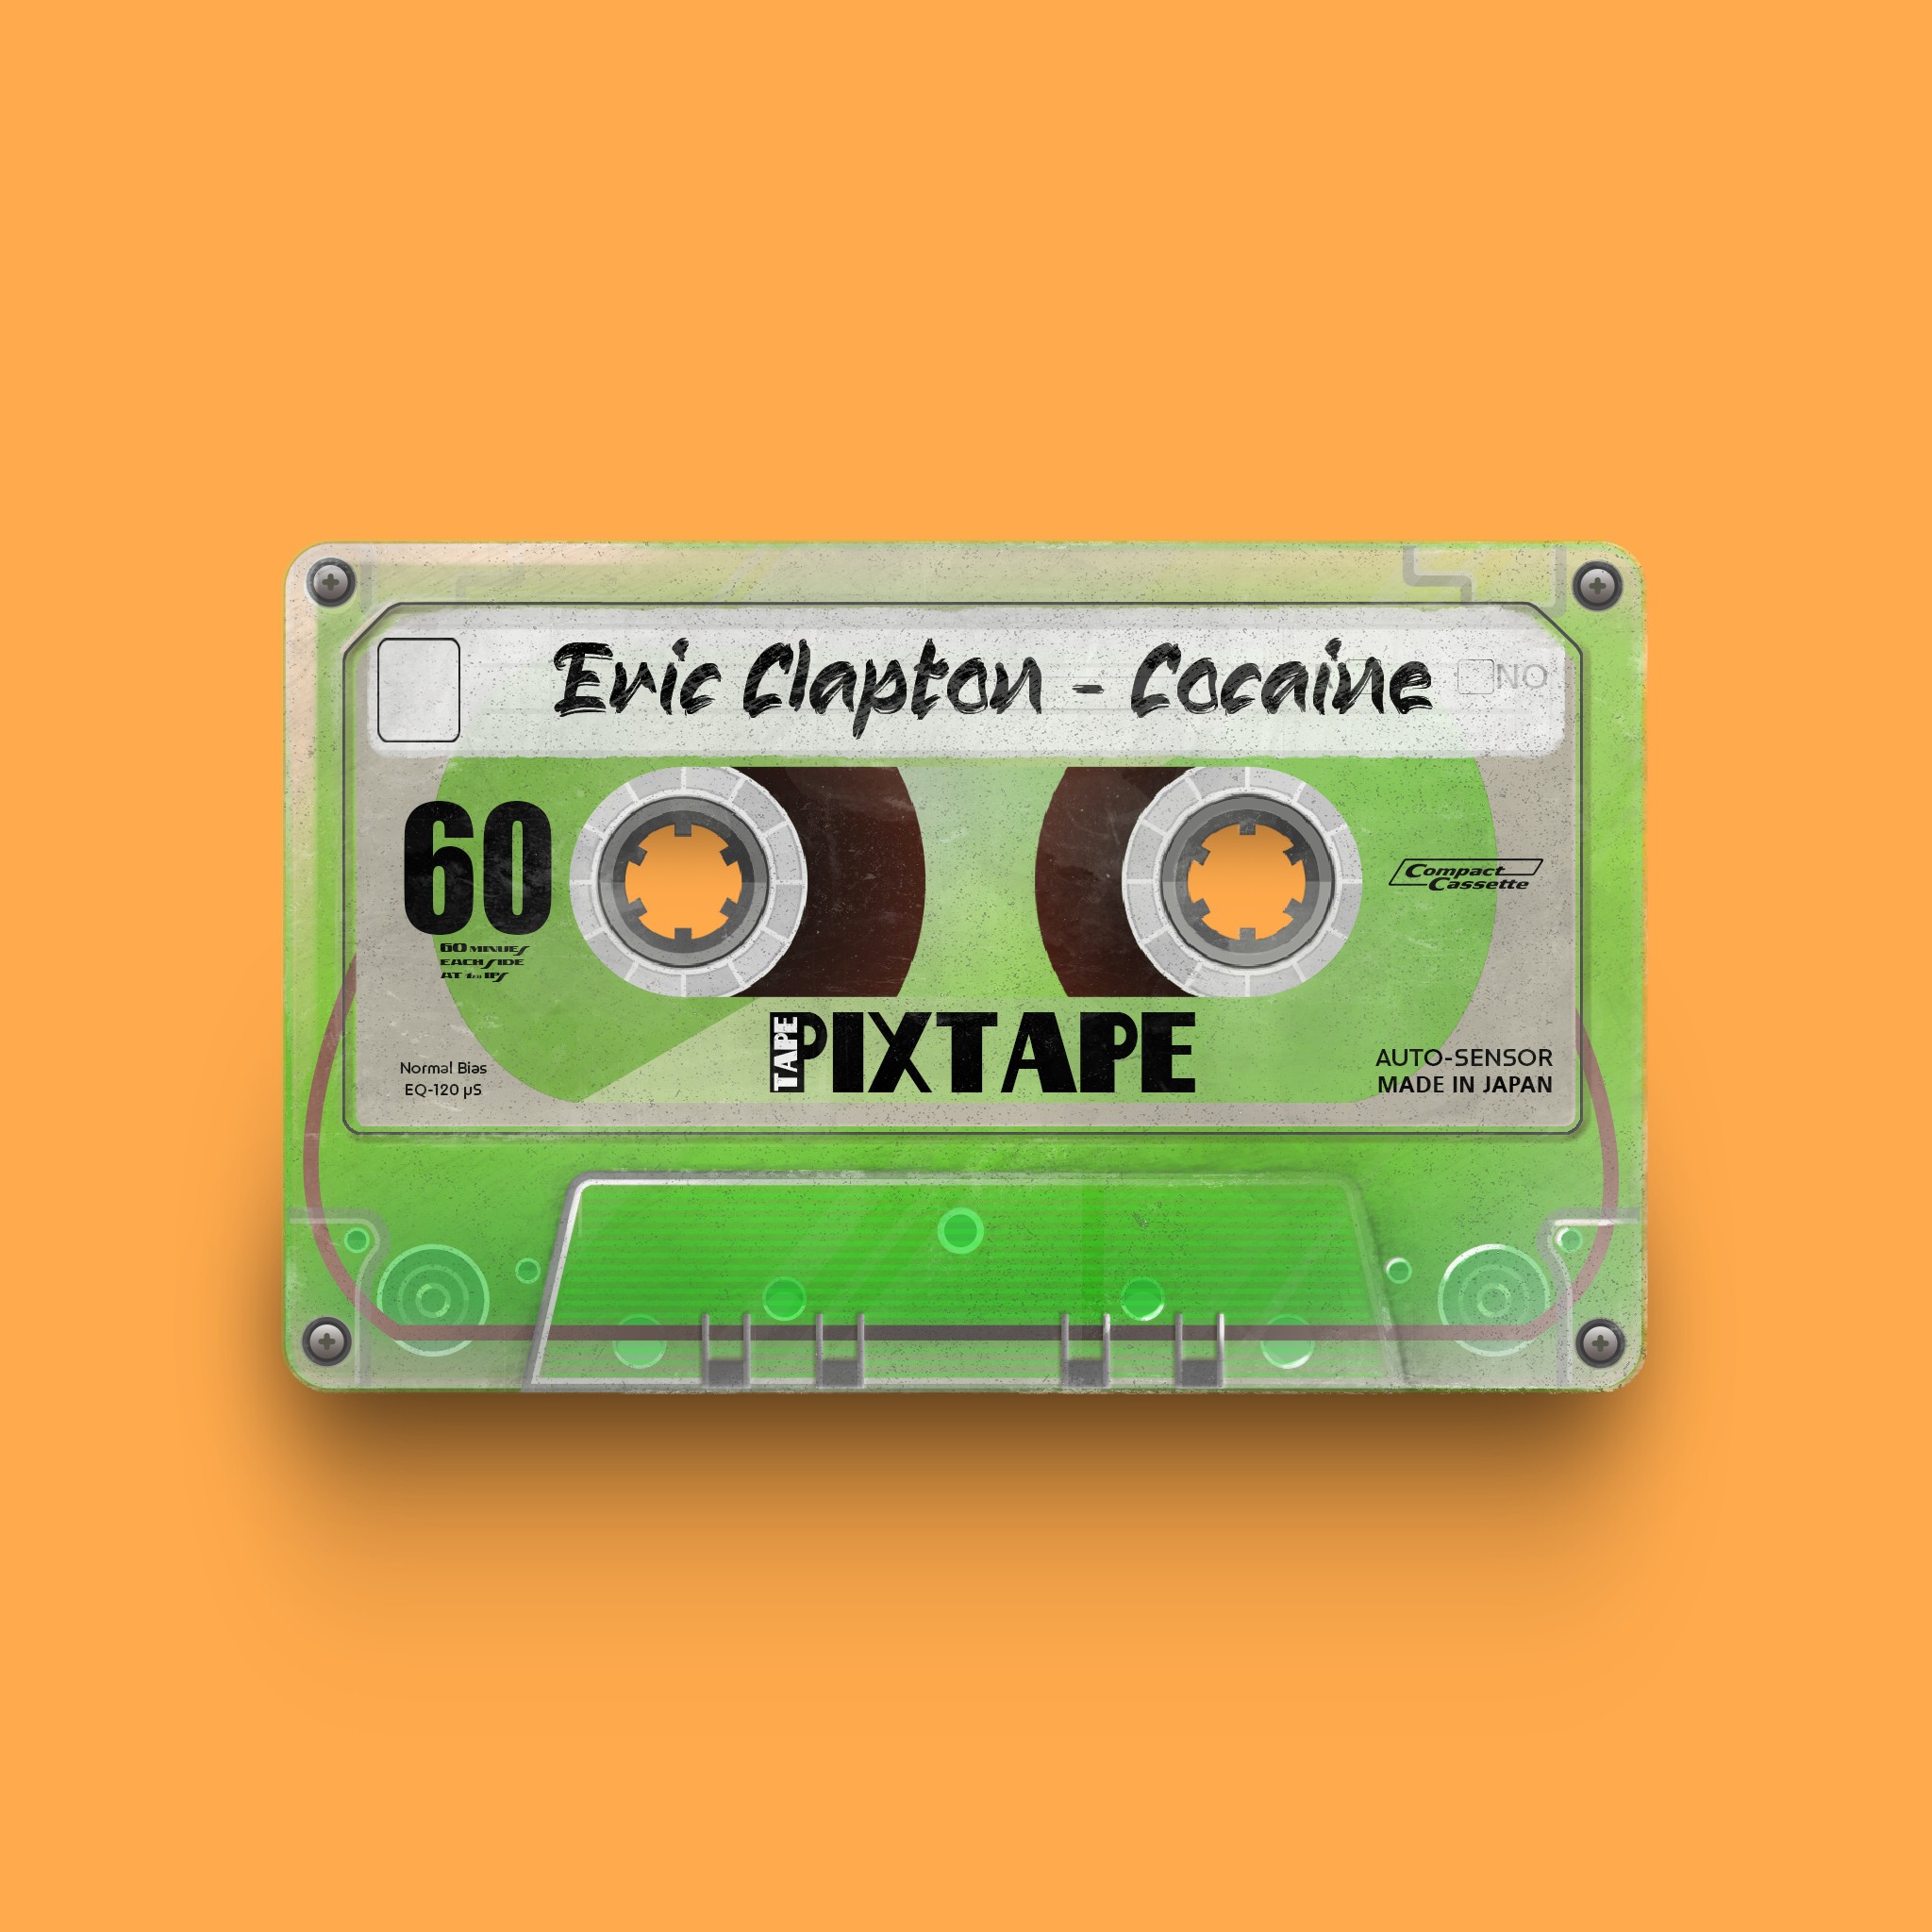 PixTape #3563 | Eric Clapton - Cocaine